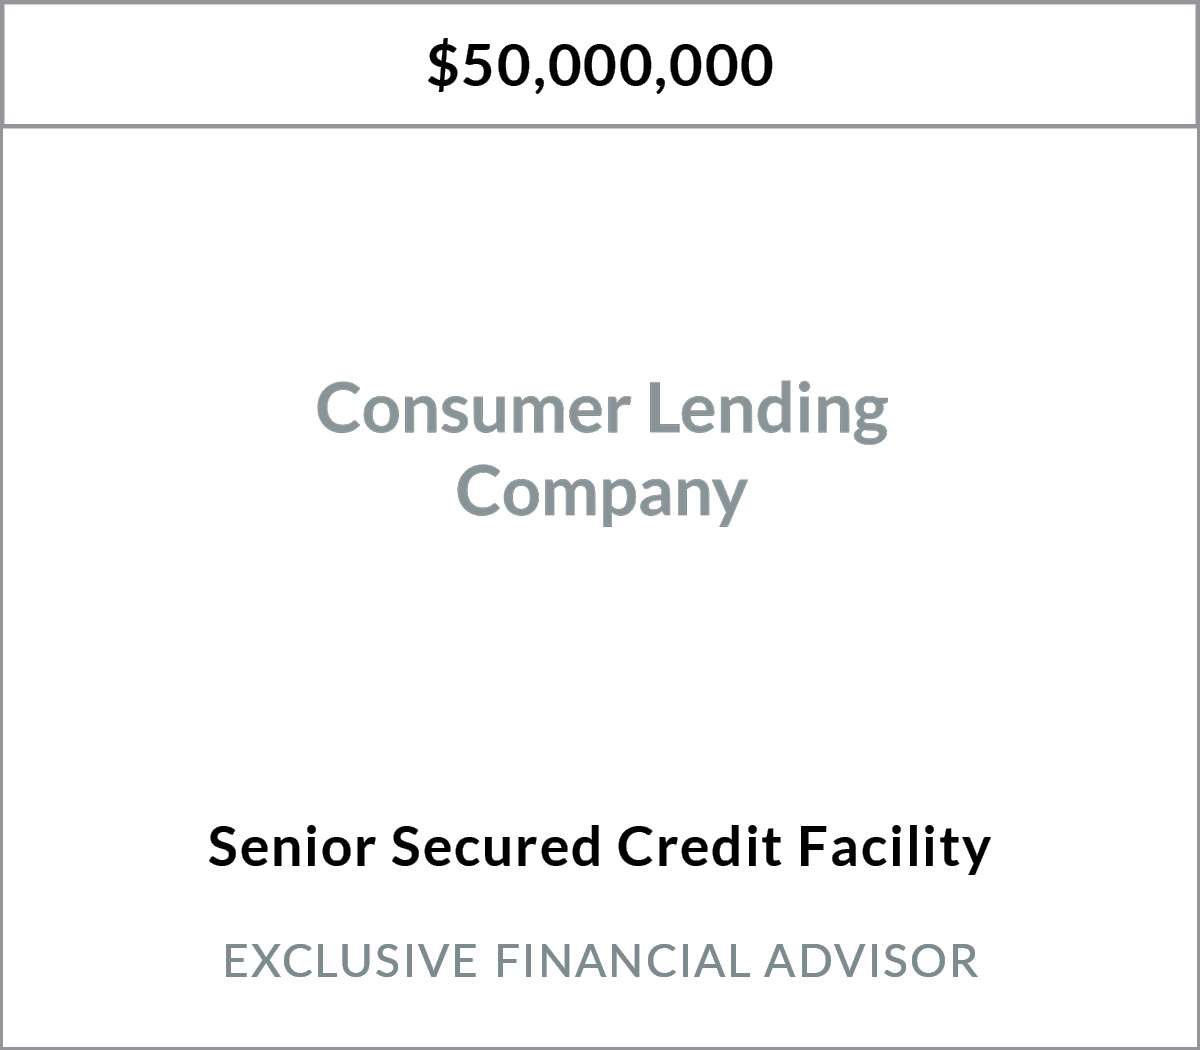 Bryant Park Capital Arranges $50 Million Senior Secured Credit Facility For A Consumer Lending Company